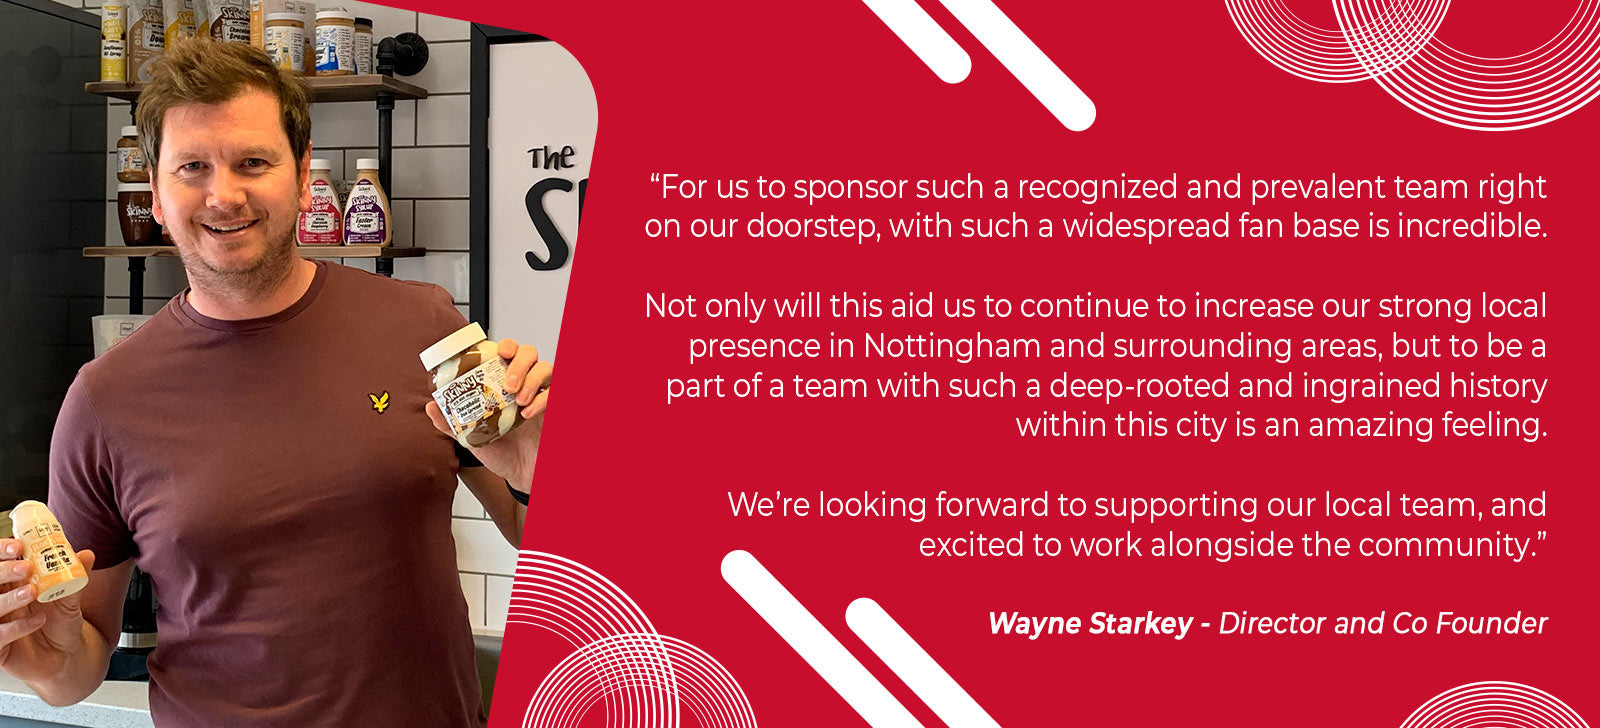 Wayne Starkey Sponsorship with Nottingham Forest Football Club